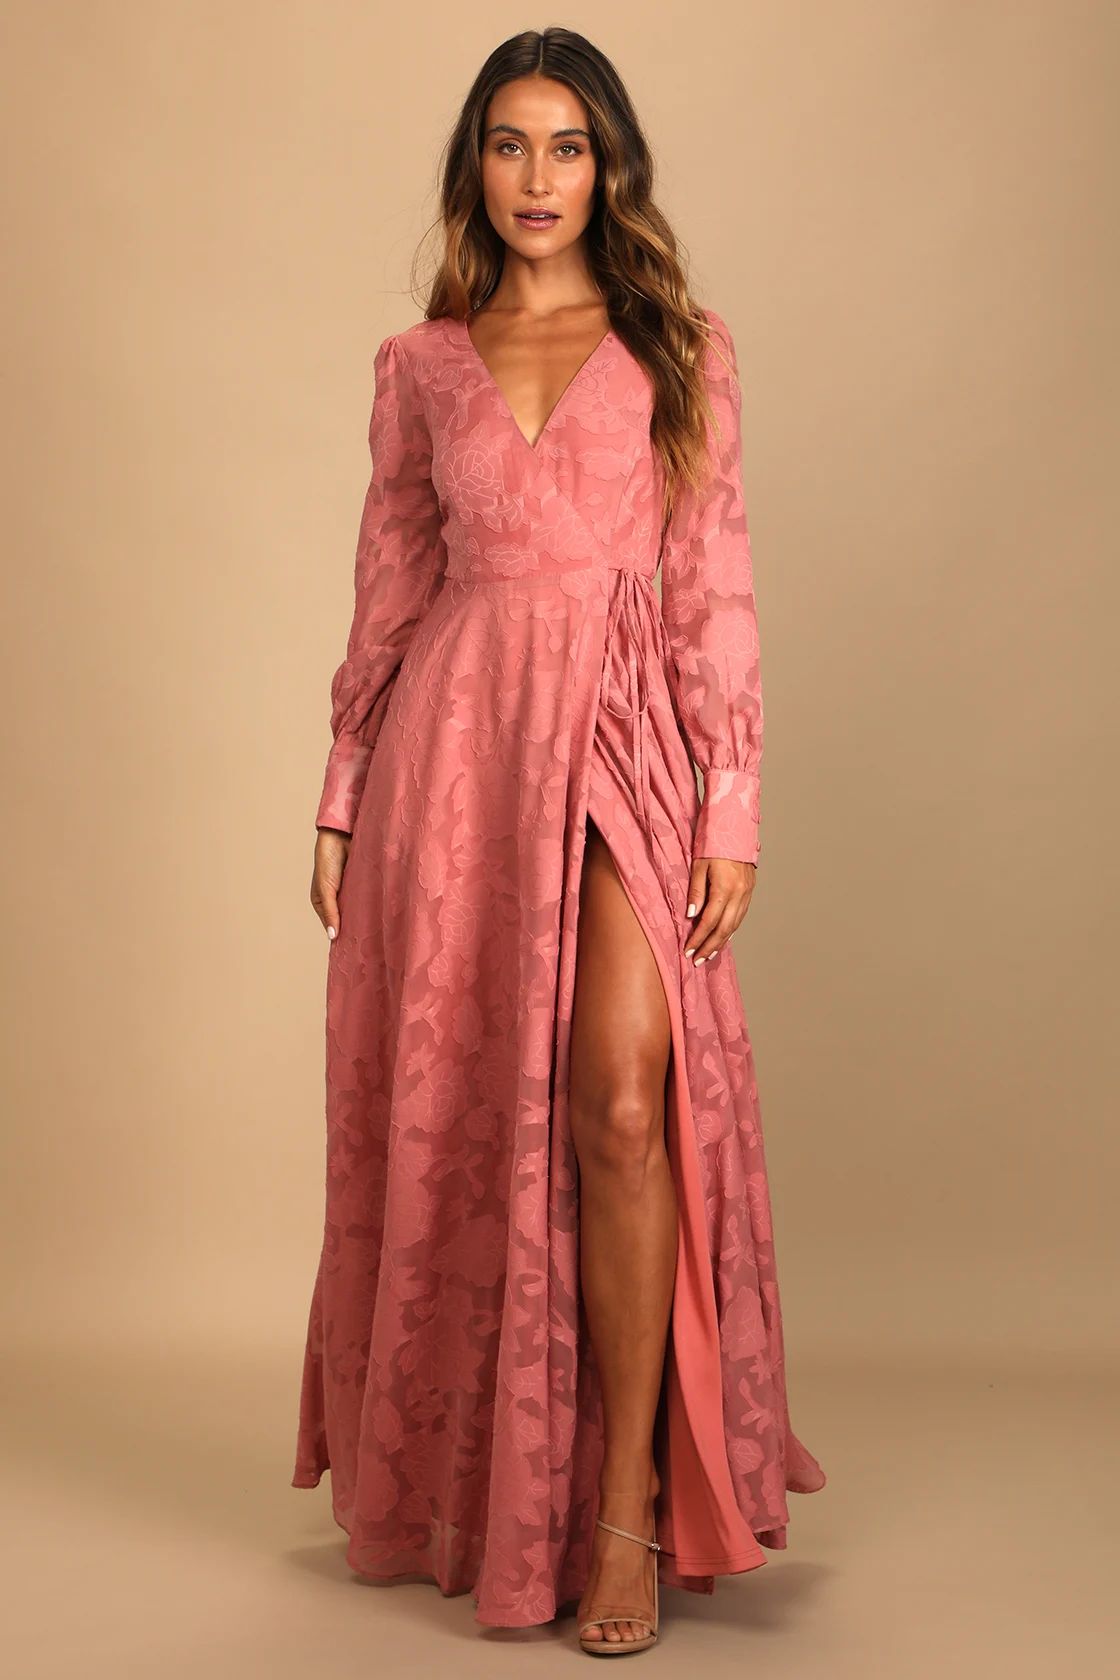 Kept Your Love Rose Pink Floral Jacquard Long Sleeve Maxi Dress | Lulus (US)